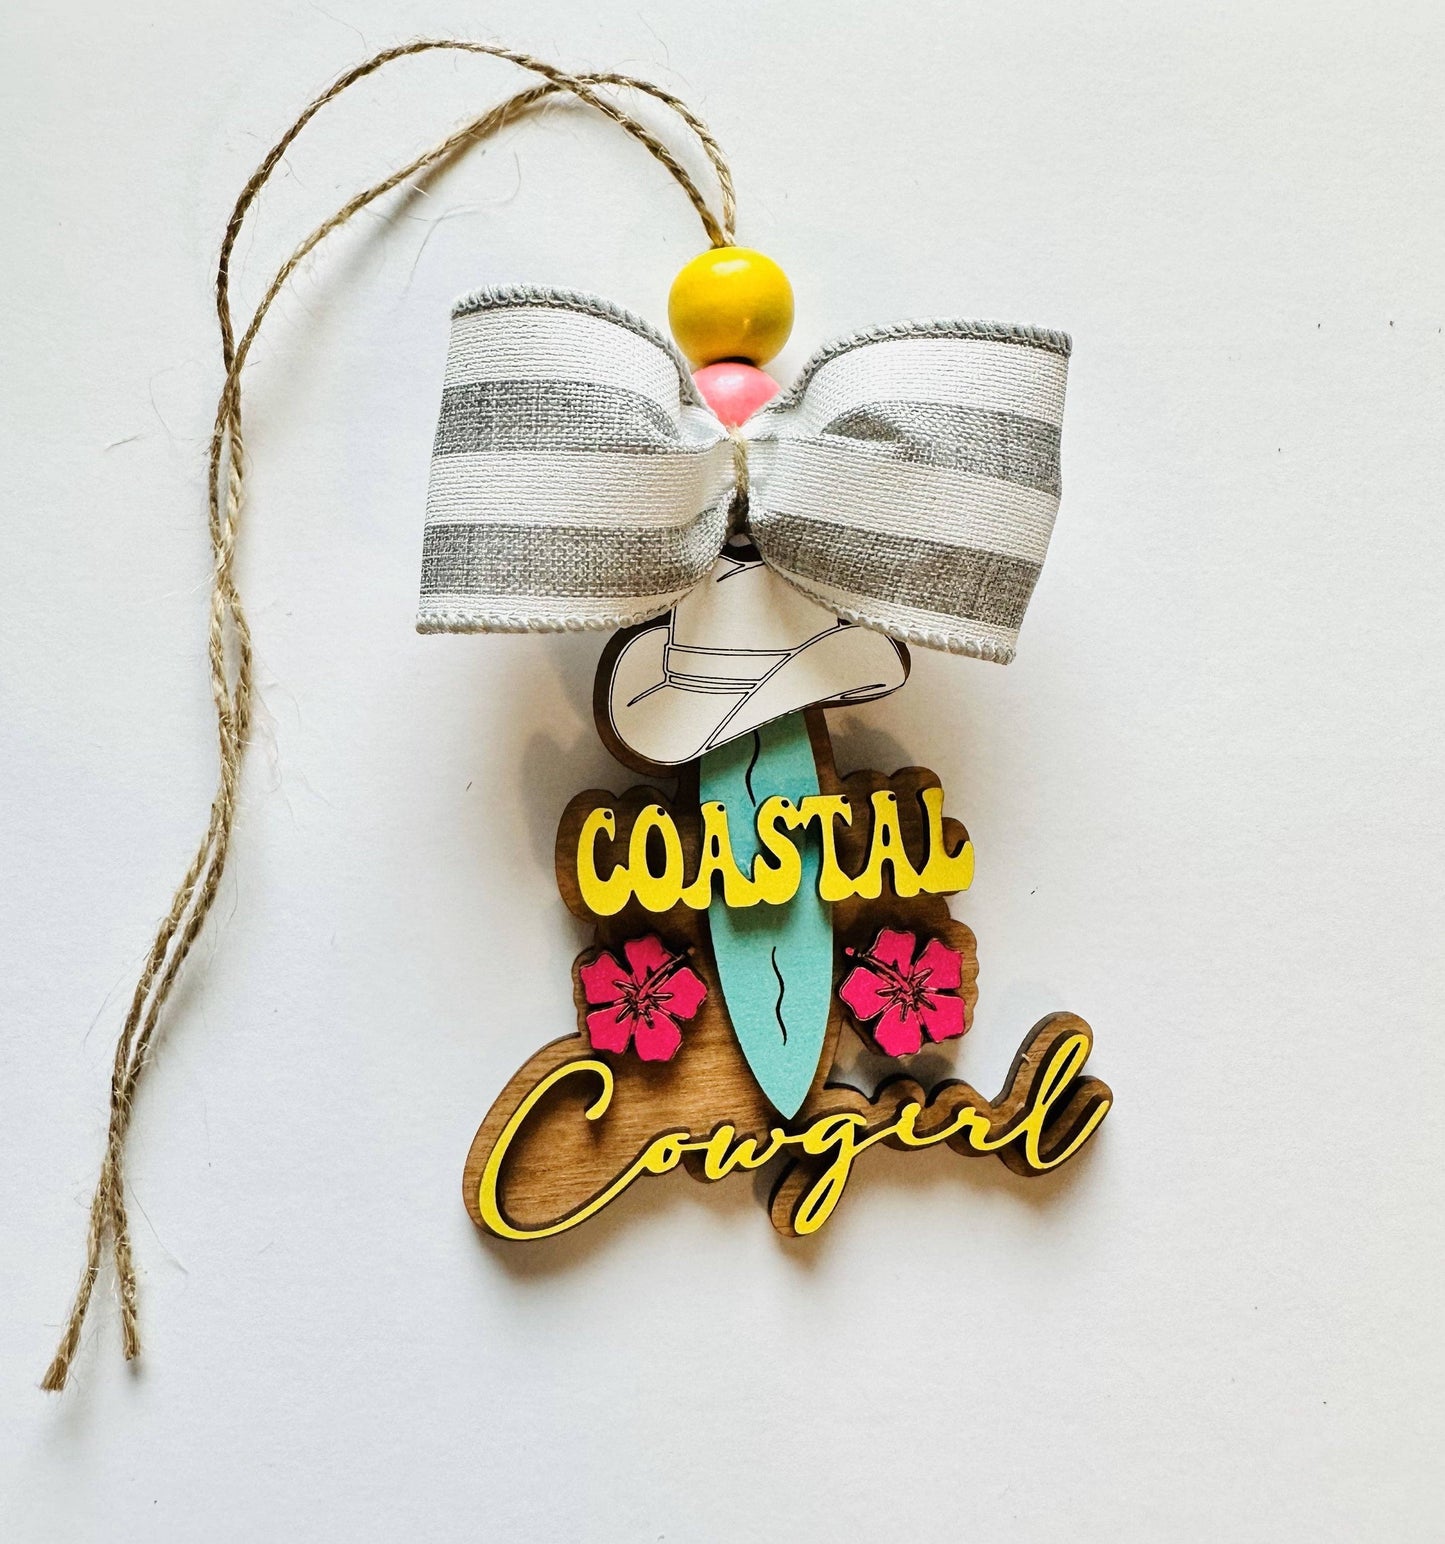 Southern Attitude Designs Inc Blouses Coastal Cowgirl Car Charm/Bag Tag